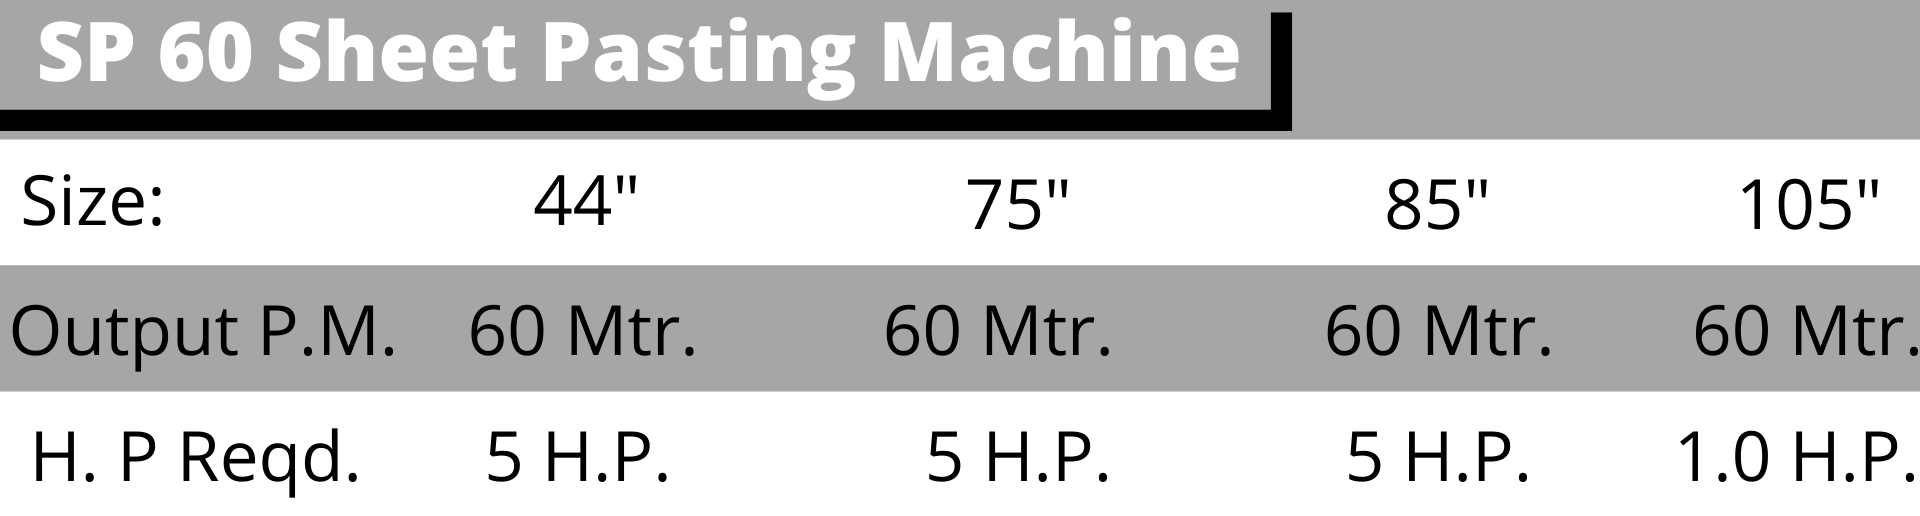 SP 60 Sheet Pasting Machine